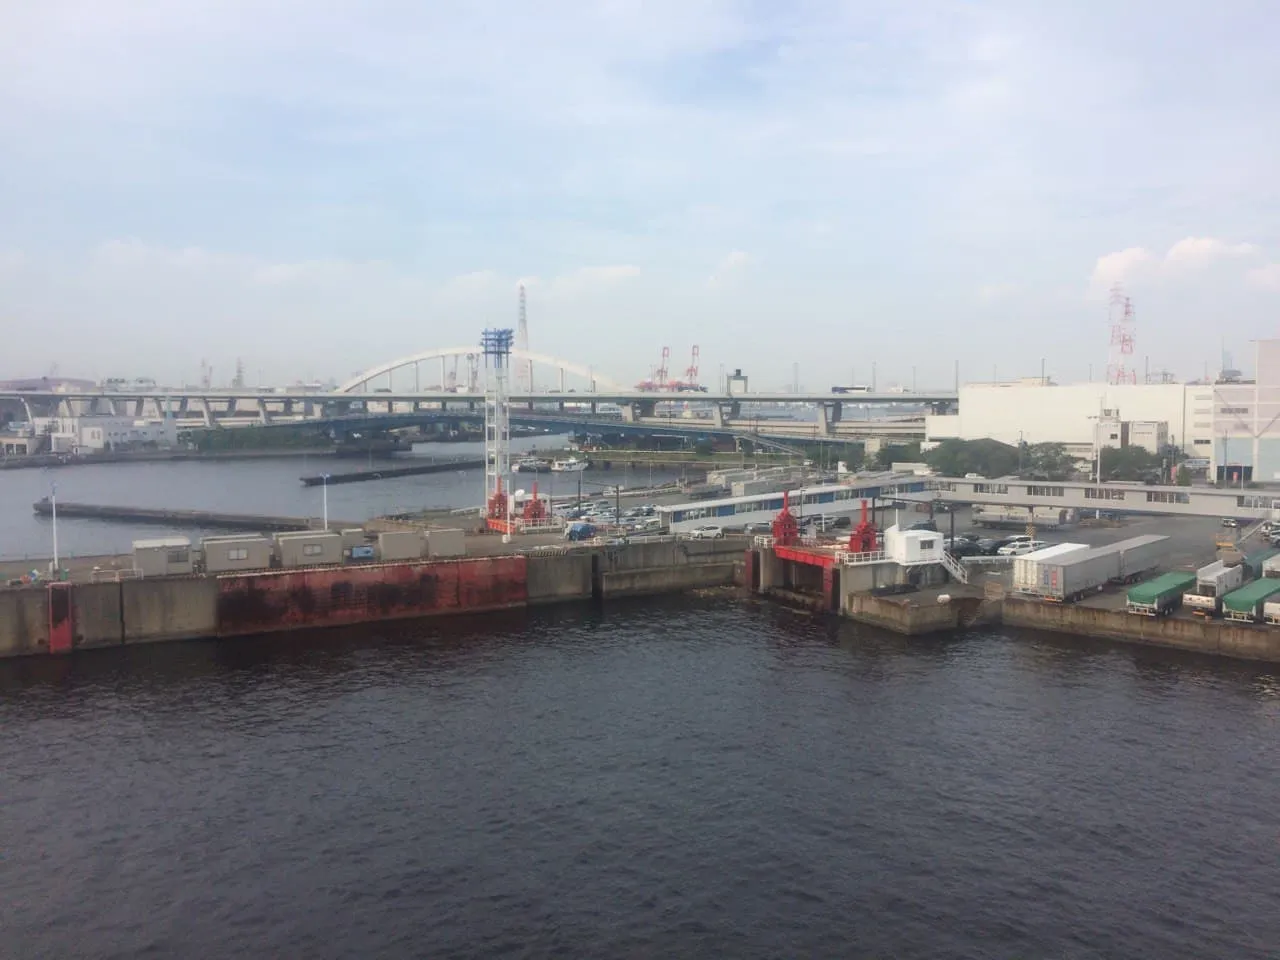 Osaka bay where we took a ship to Moji, Kyushu island